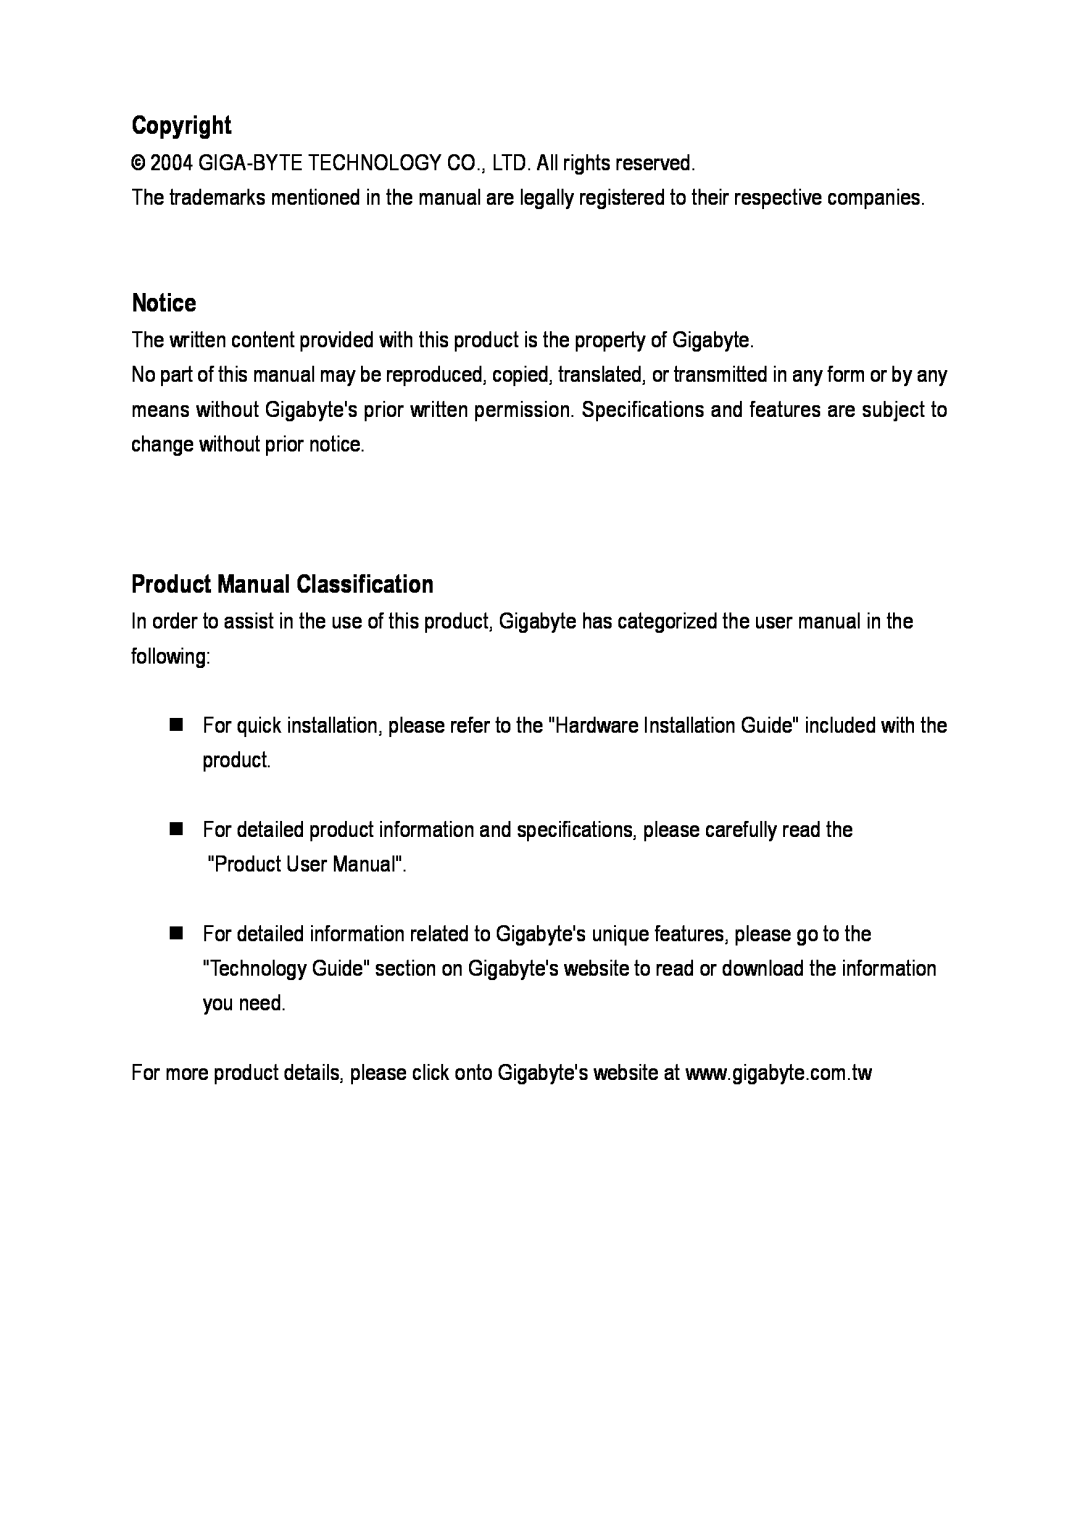 Gigabyte GA-8I925X-G user manual Copyright, Product Manual Classification 